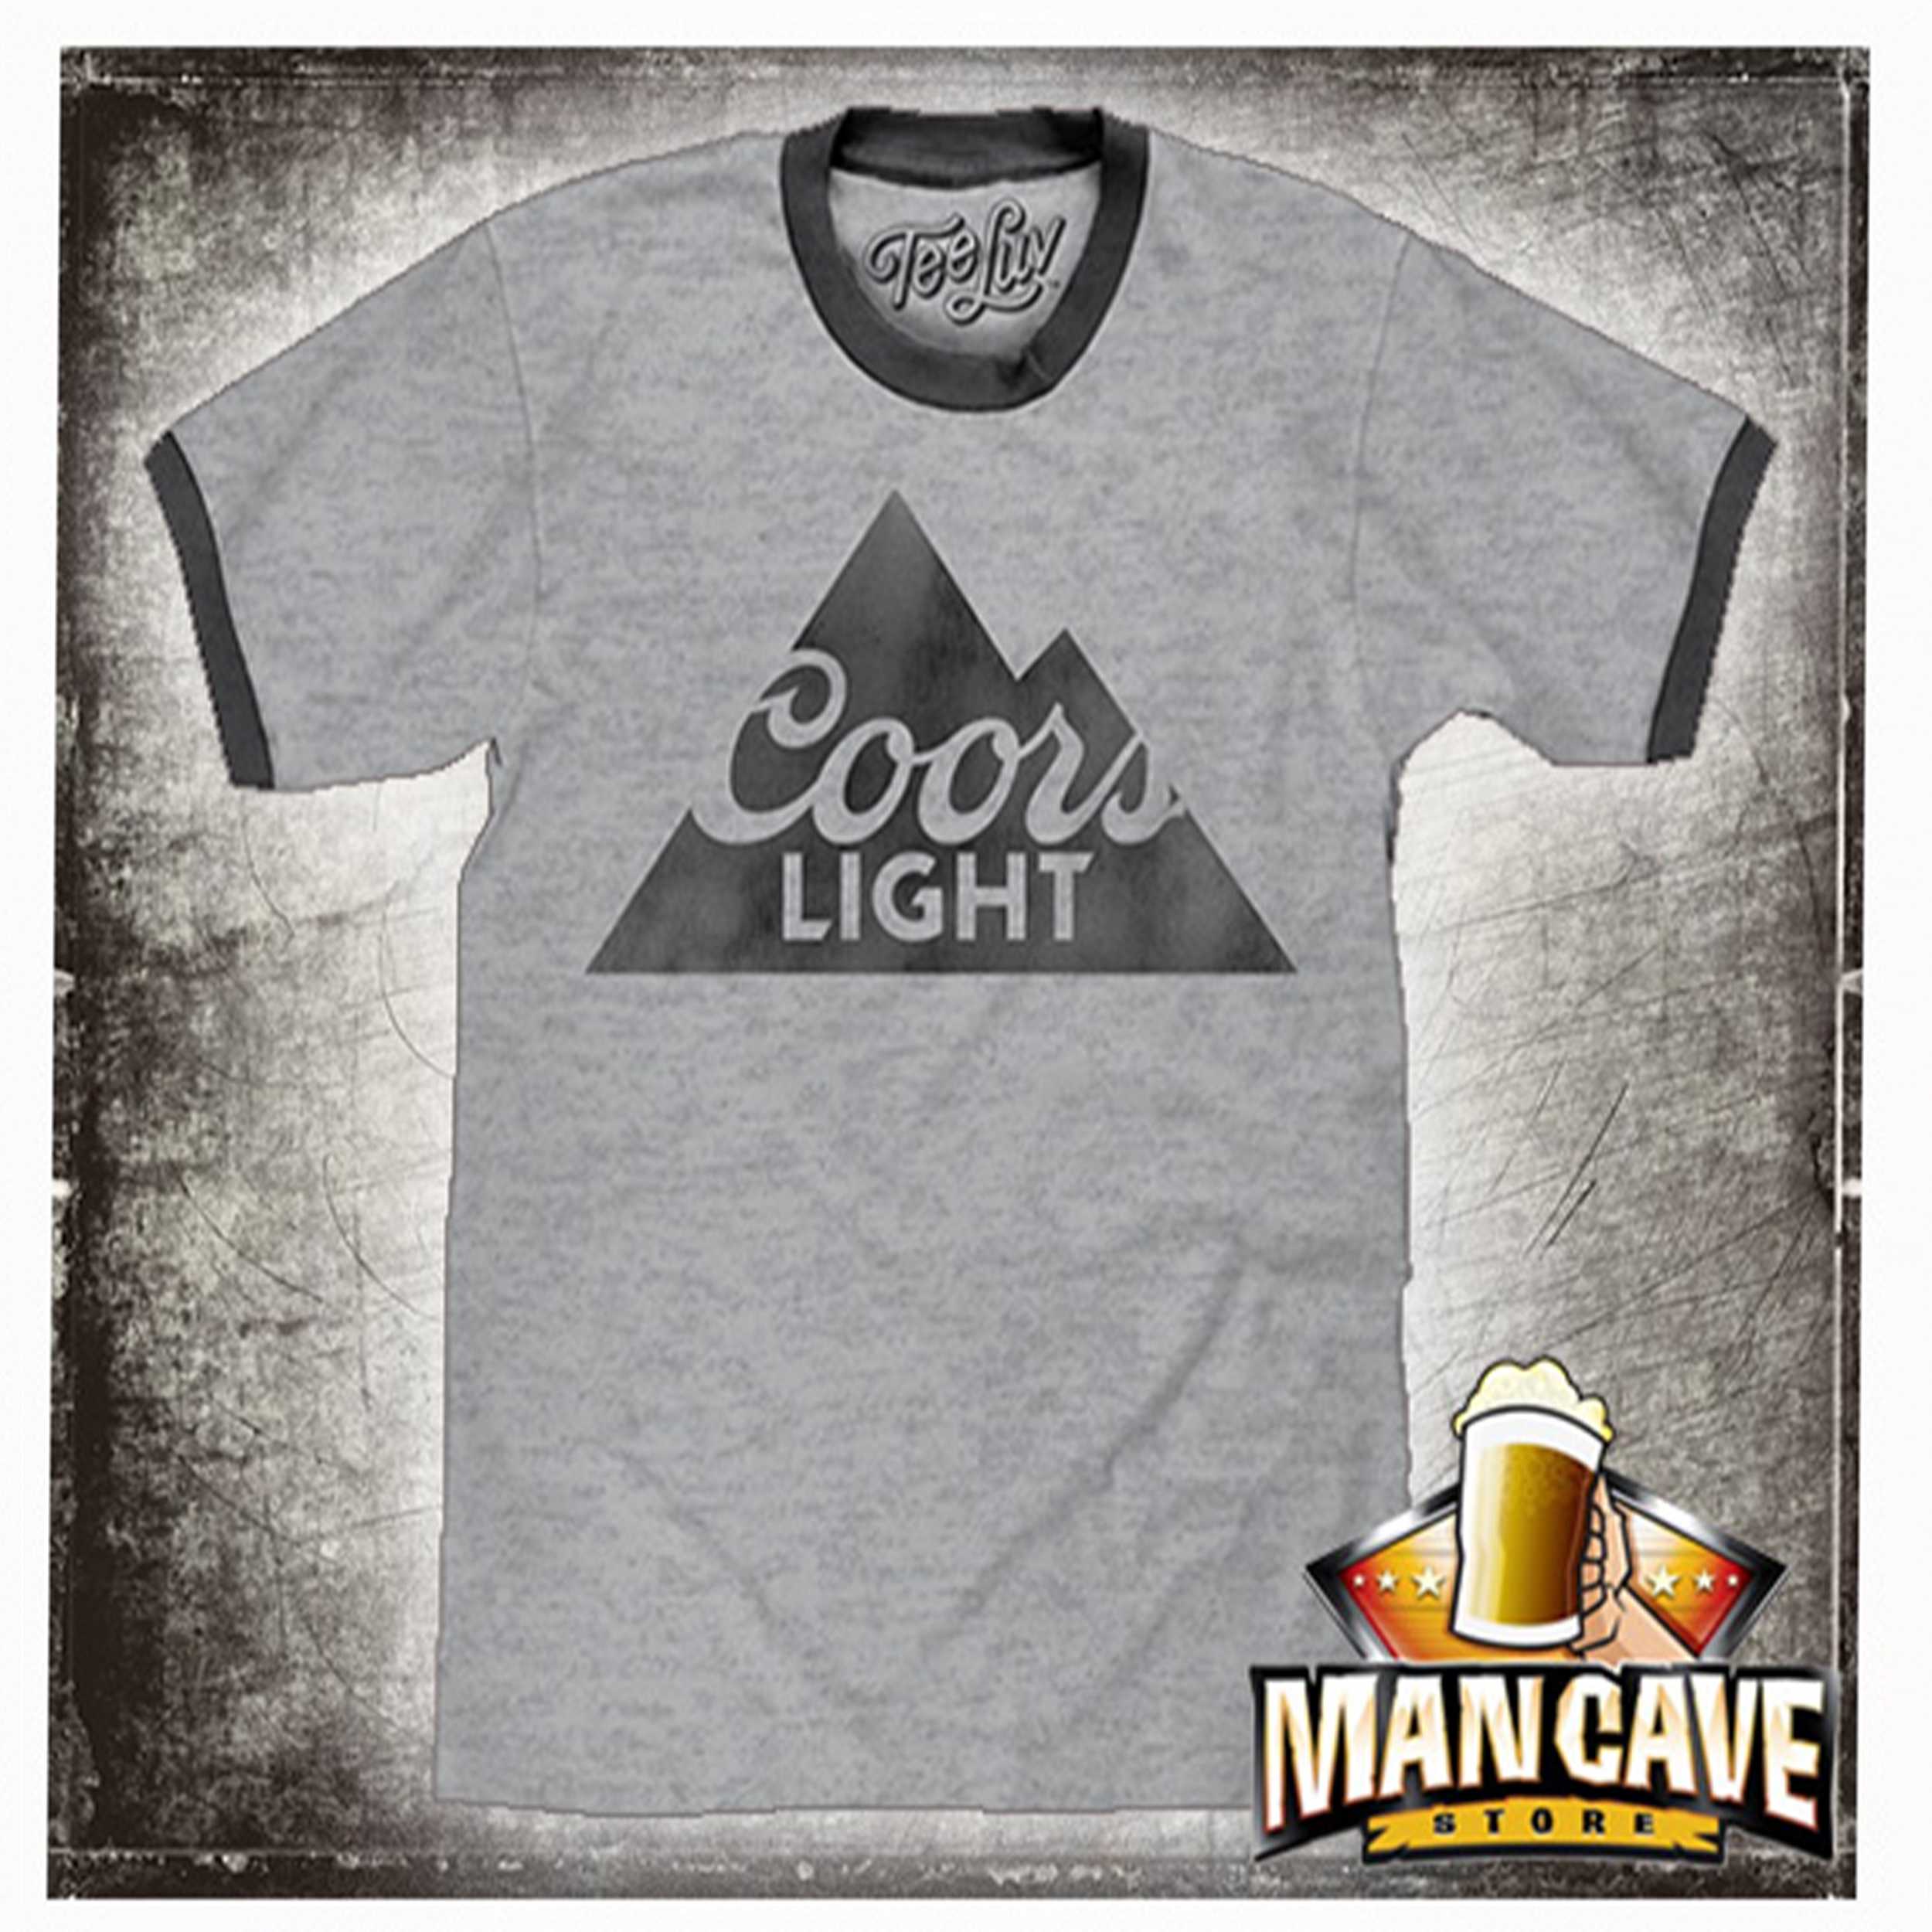 Coors Light Cube on Gray T-shirt